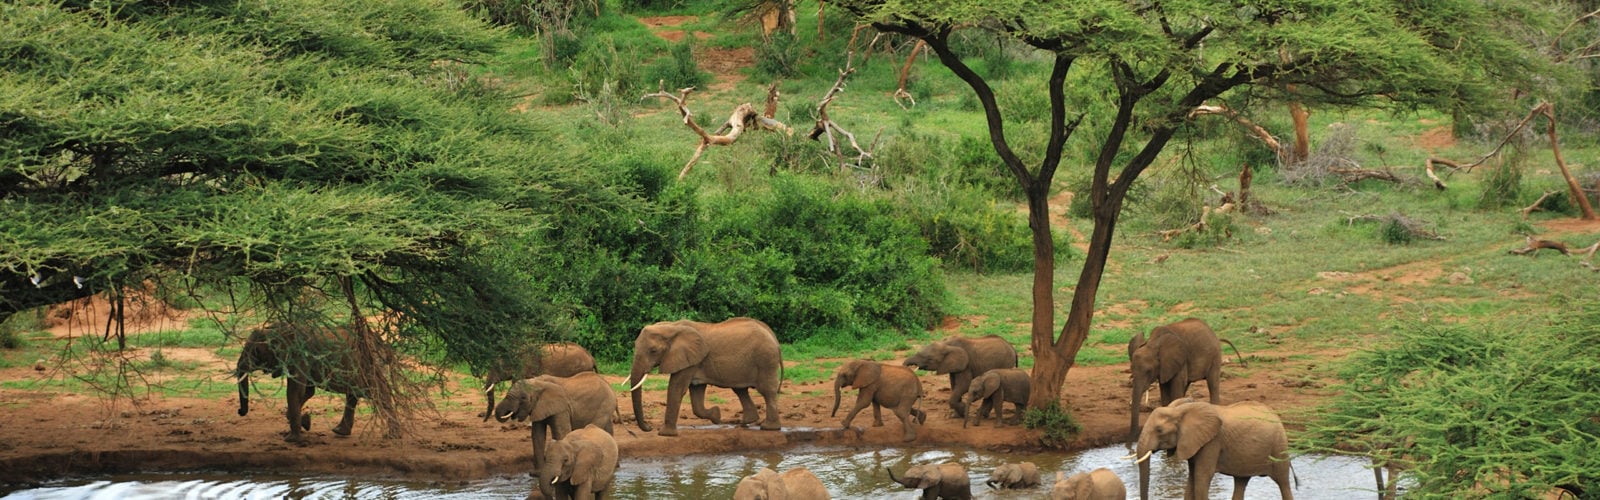 laikipia-elephants